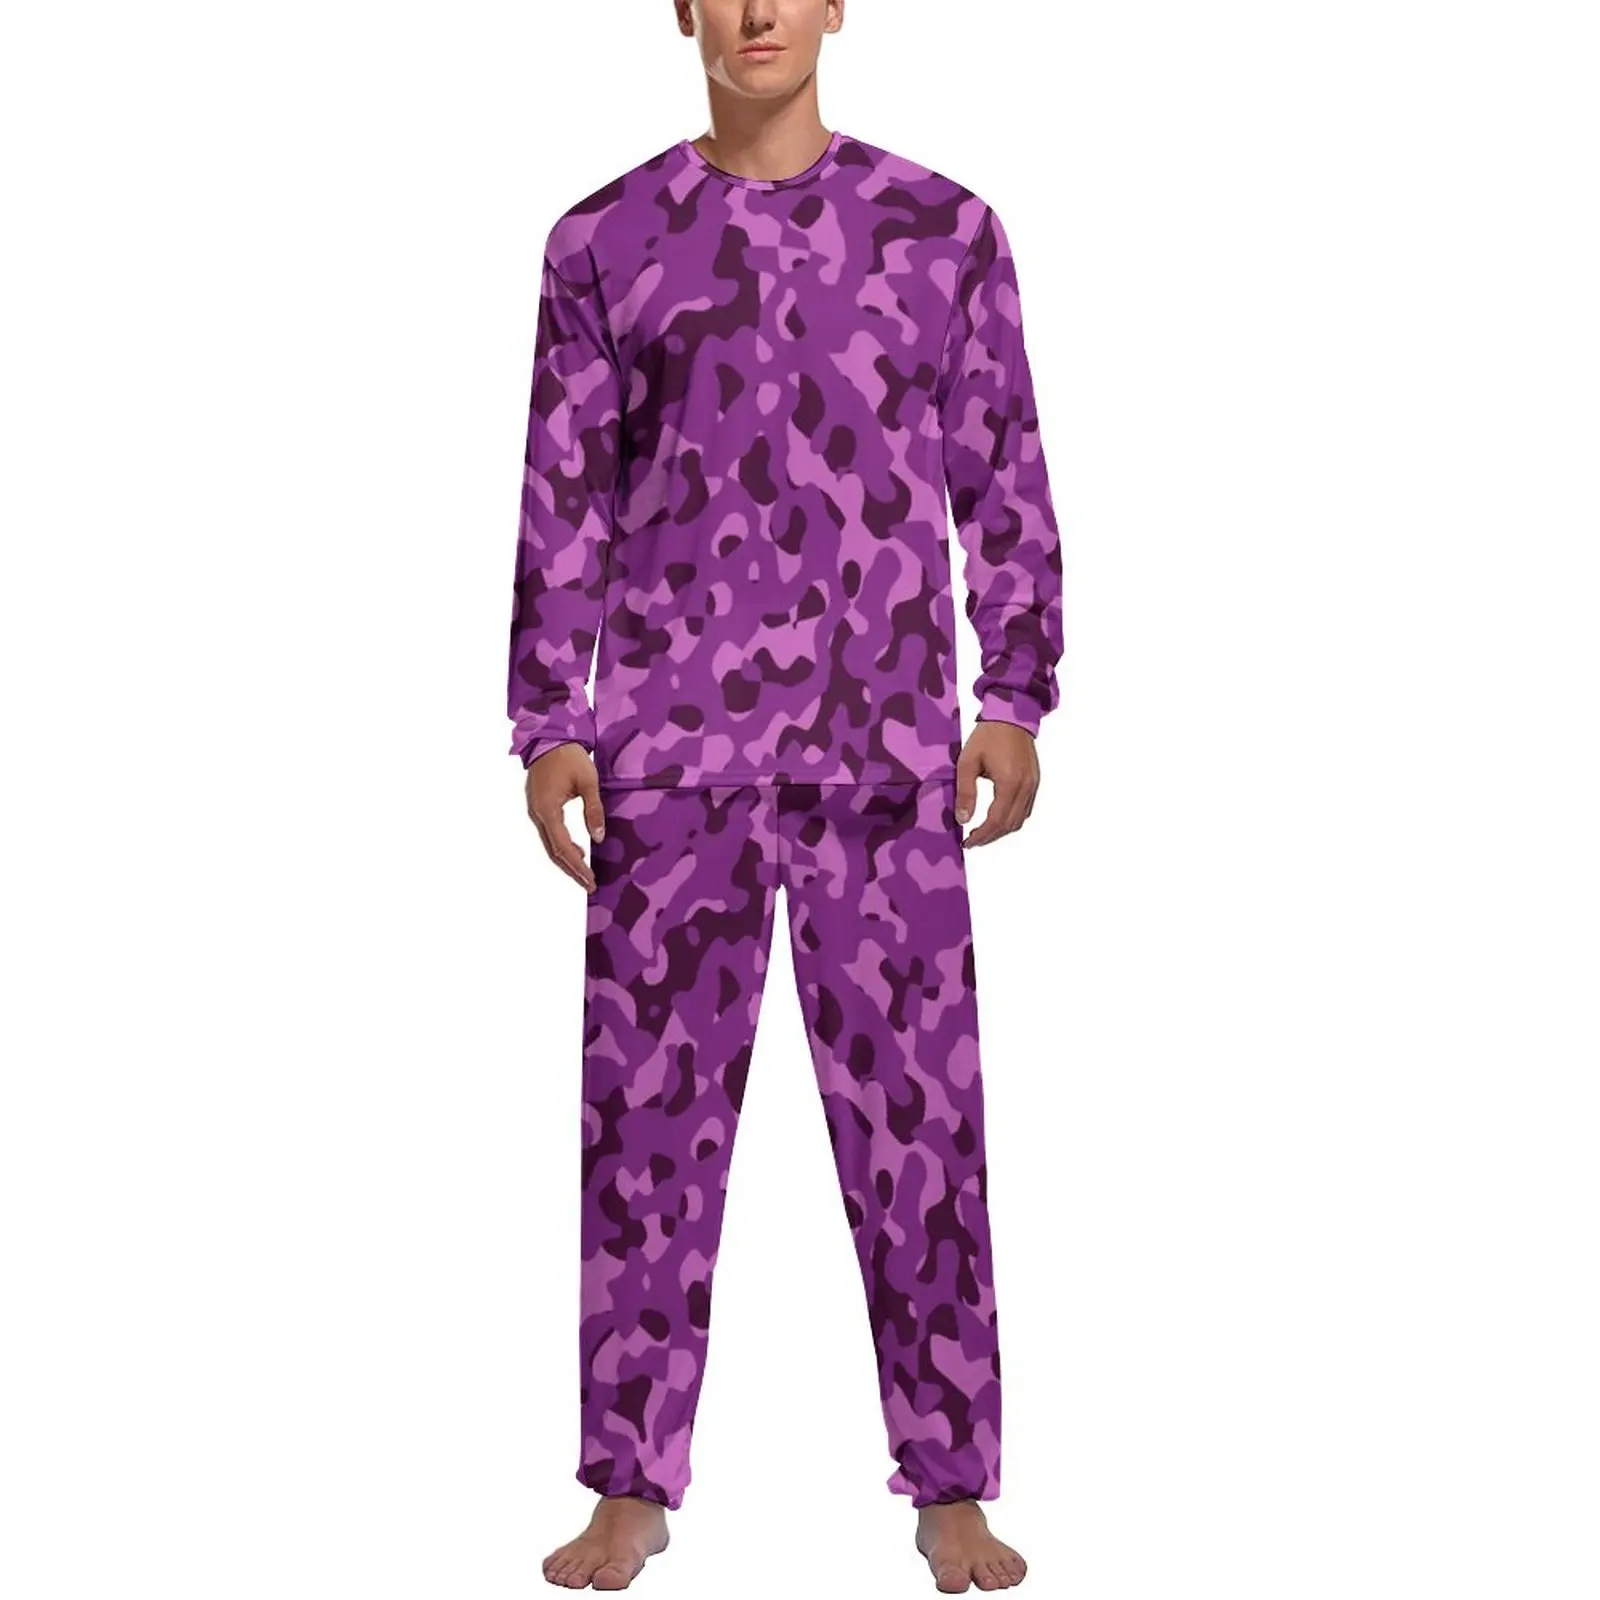 Abstract Camo Print Pajamas Autumn Purple Camouflage Leisure Home Suit Man Two Piece Printed Long Sleeves Warm Pajamas Set